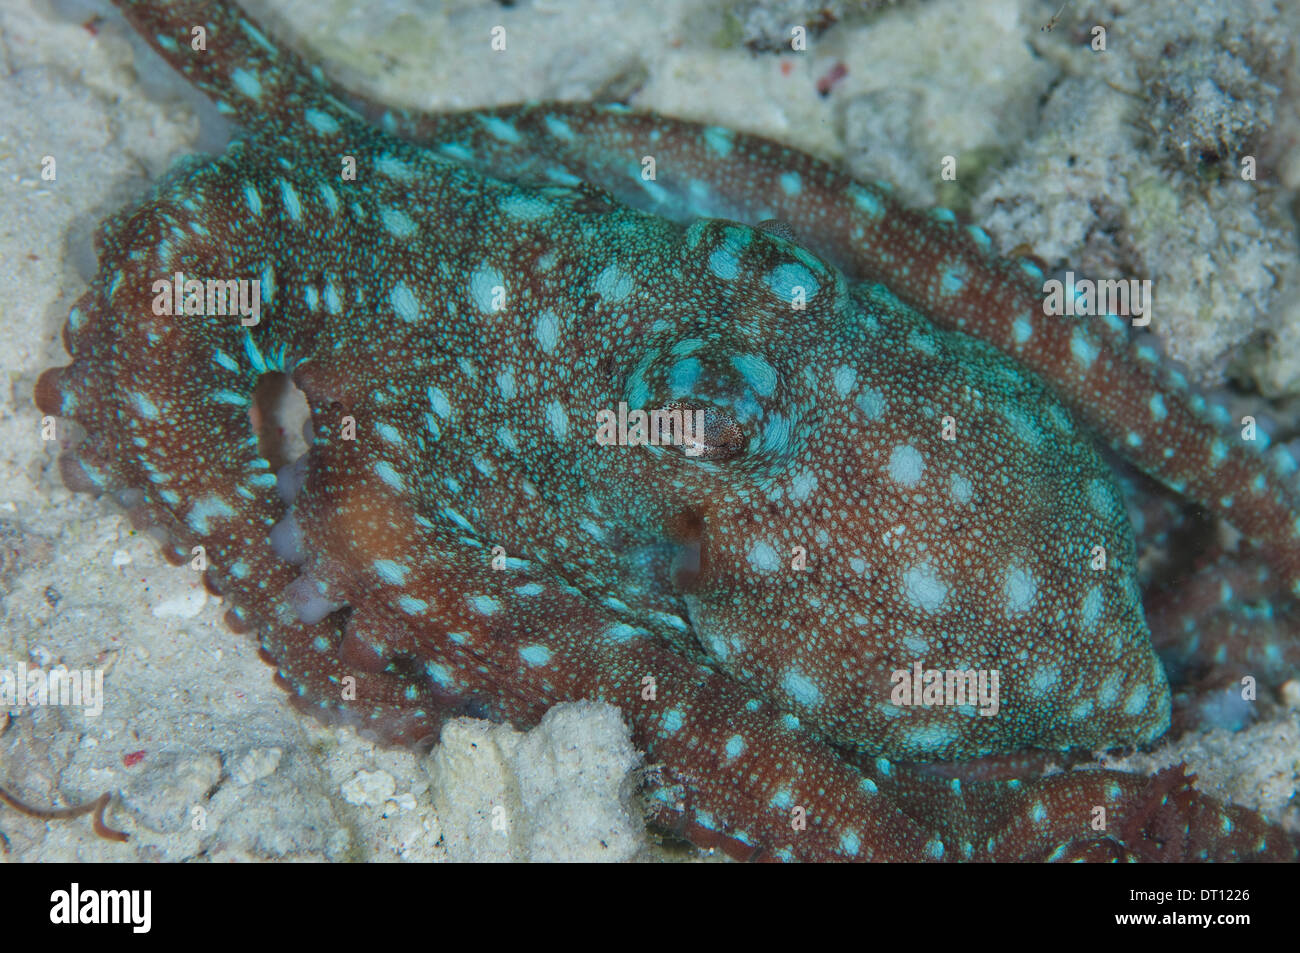 Starry Night Octopus, Octopus luteus, Individual on sand bootom, Halmahera, Maluku Islands, Indonesia Stock Photo